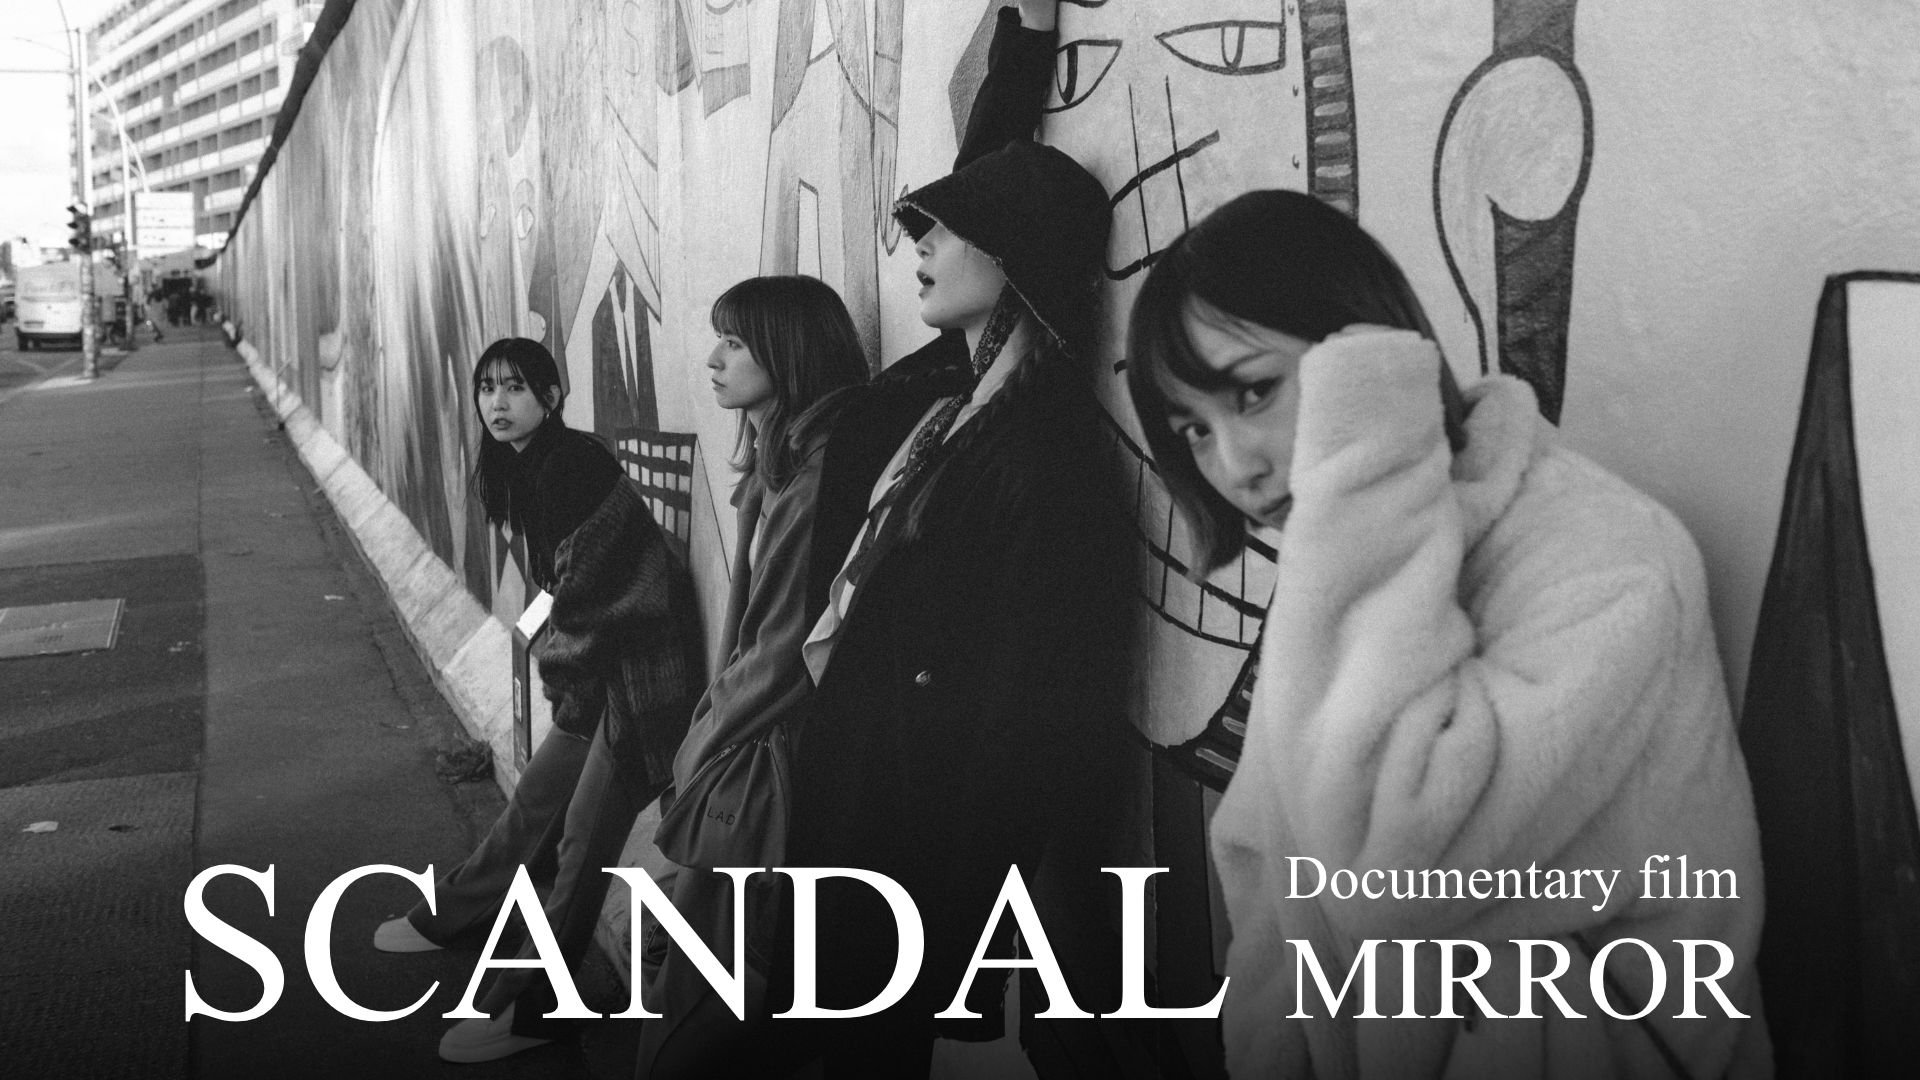 SCANDAL “Documentary film MIRROR"